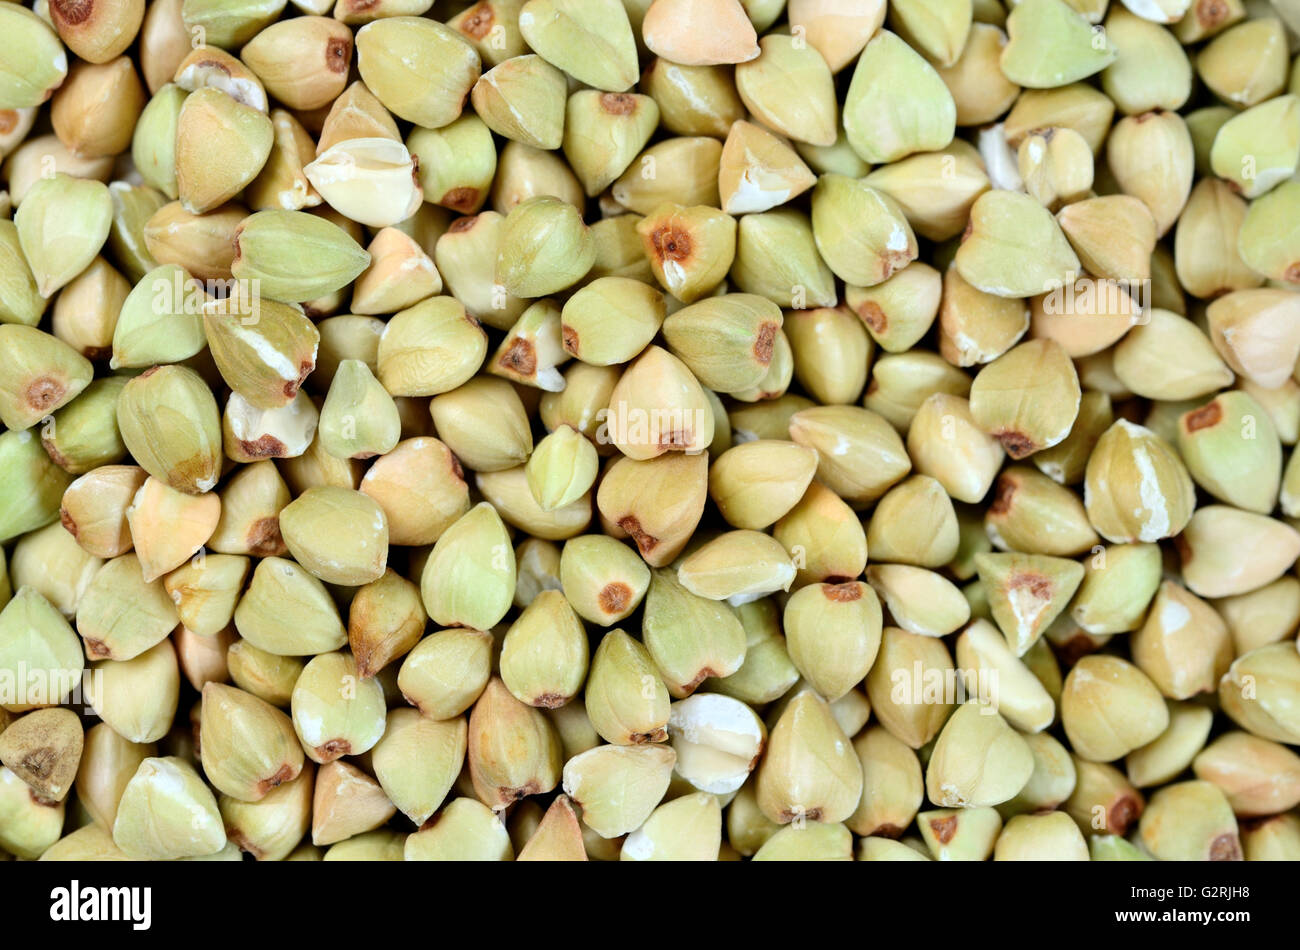 Background of green buckwheat closeup Stock Photo